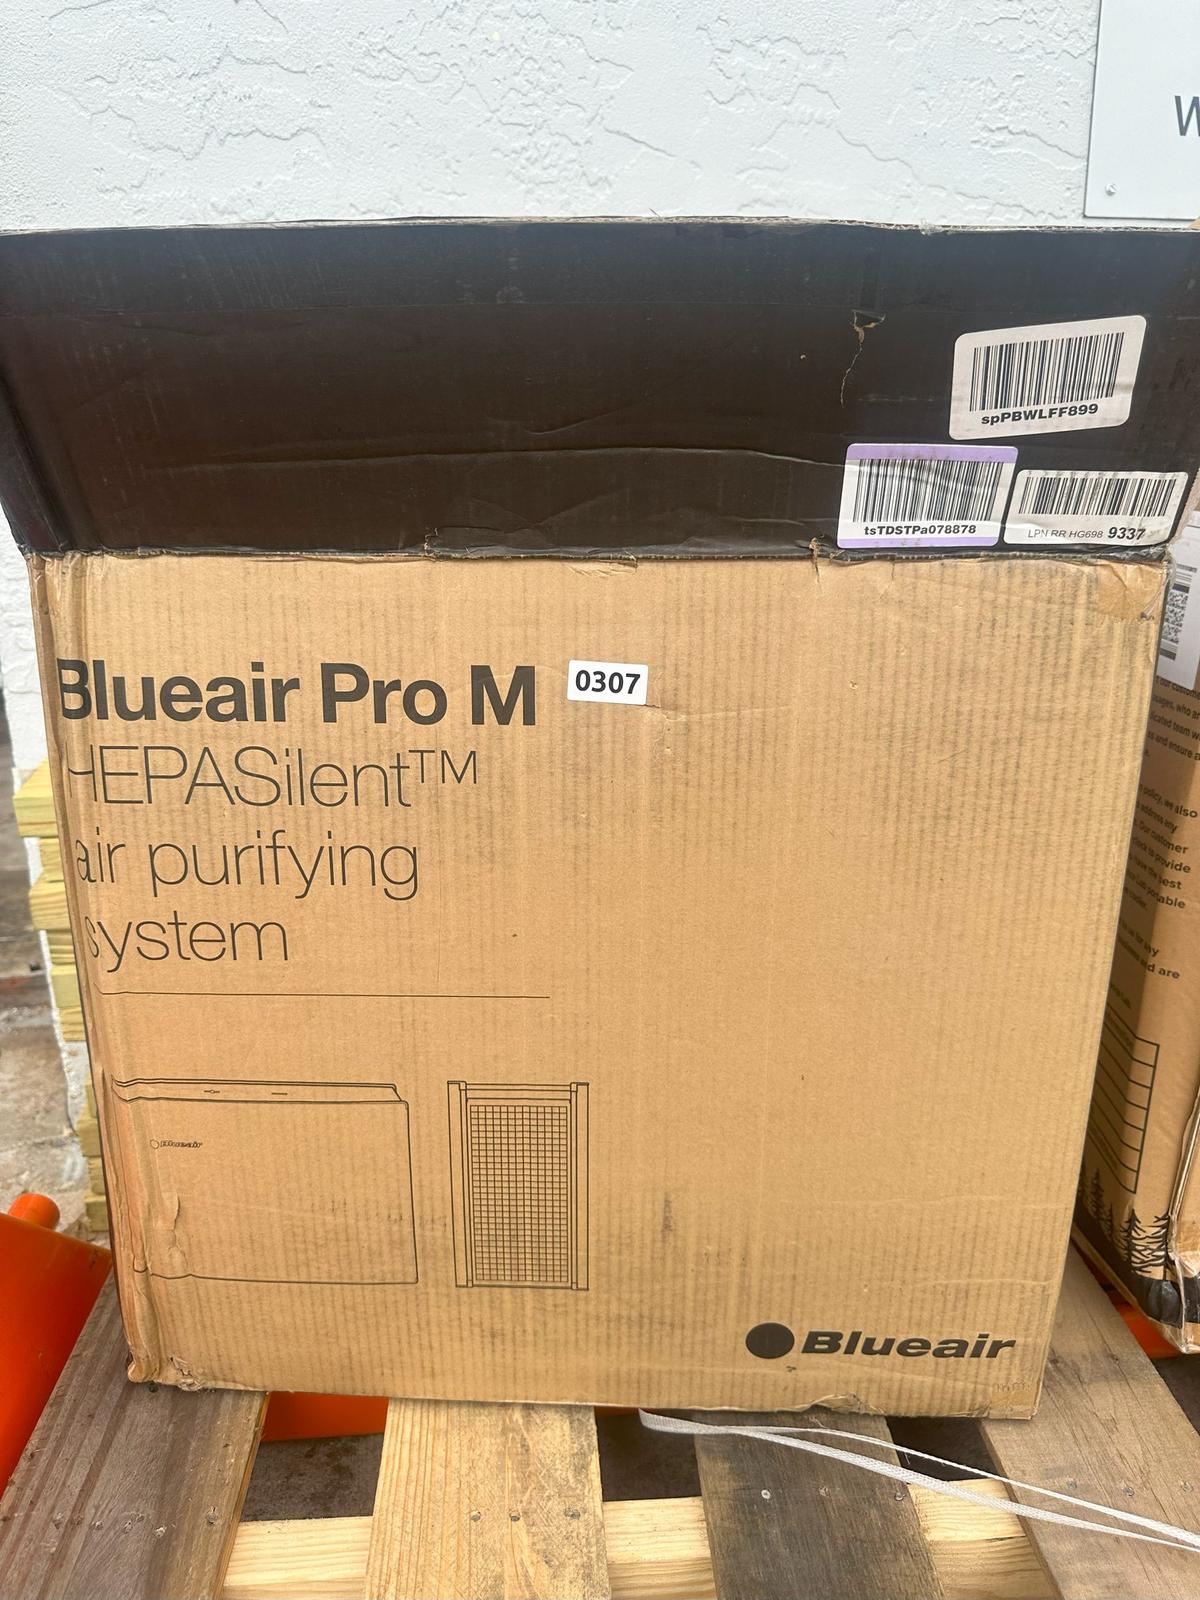 Blueair Pro M Hepa Silent Air Purifying System